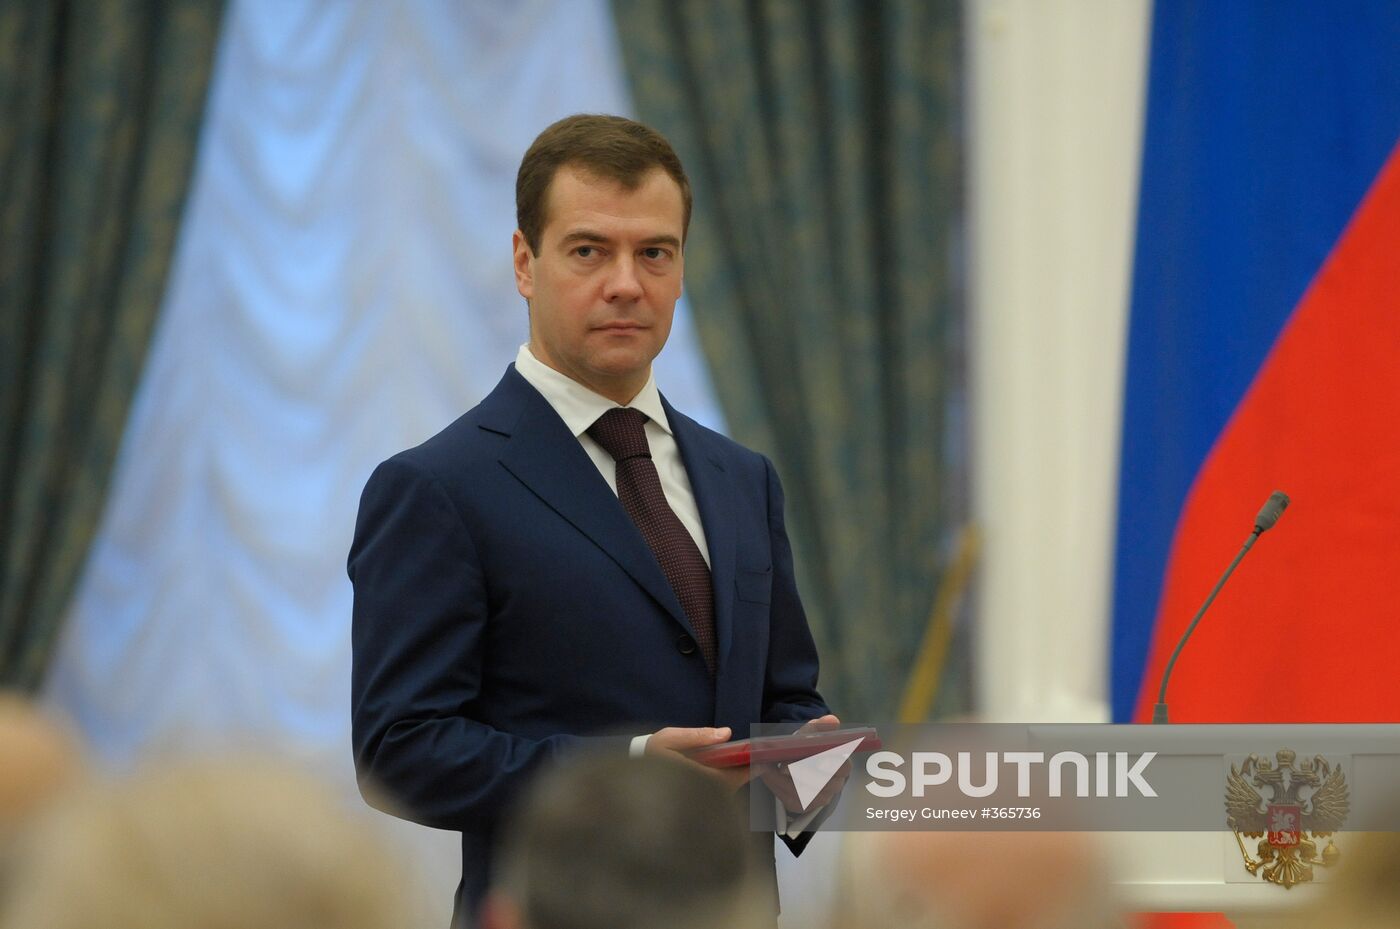 President Dmitry Medvedev presents state awards